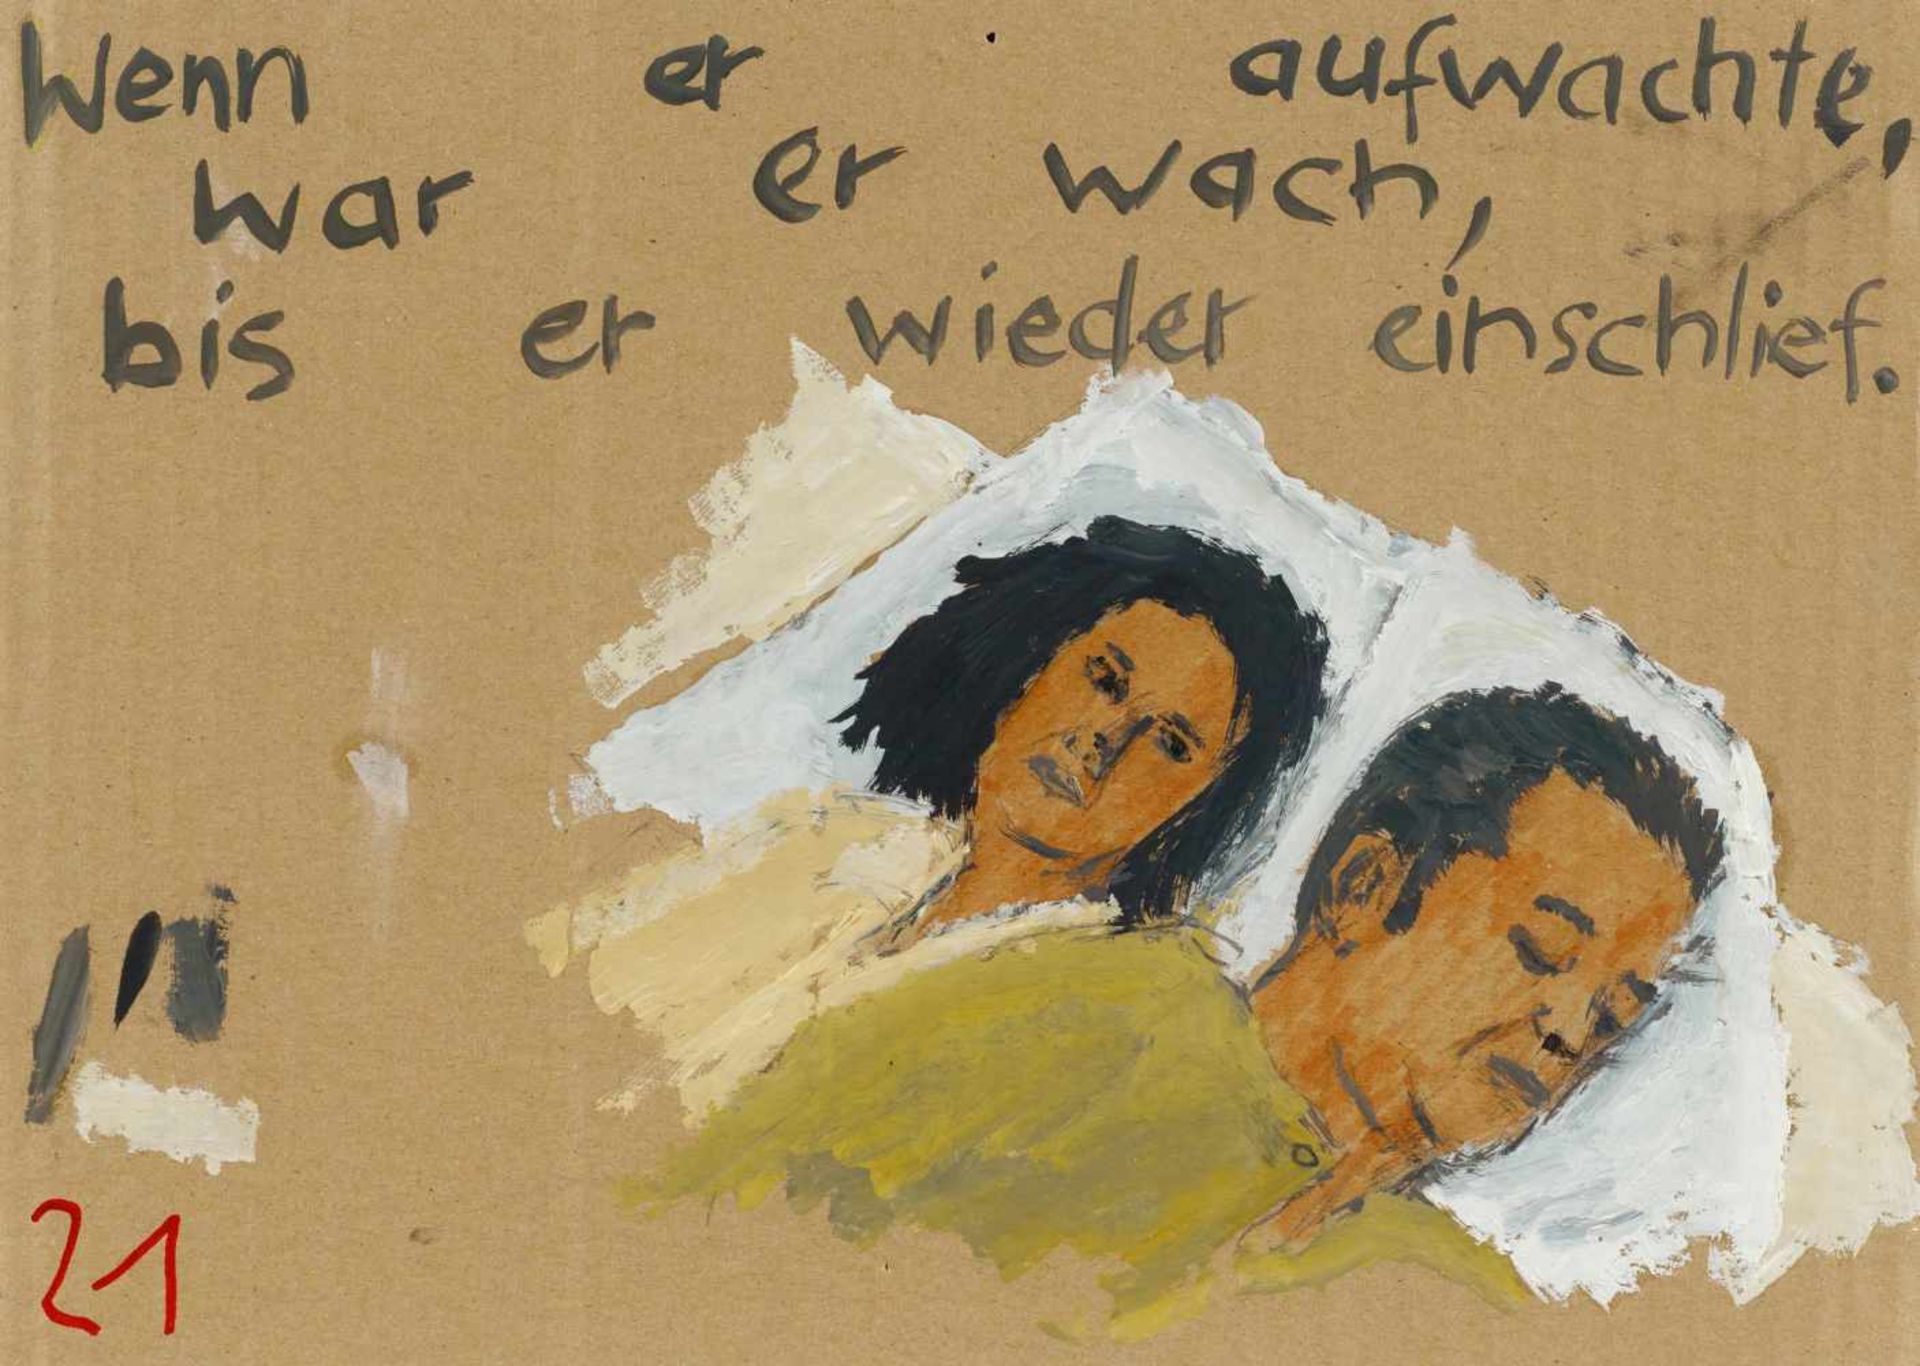 Brenner, Birgit1964 Ulm"Wenn er aufwachte". 2009. Acrylic, watercolour and felt pen on cardboard.